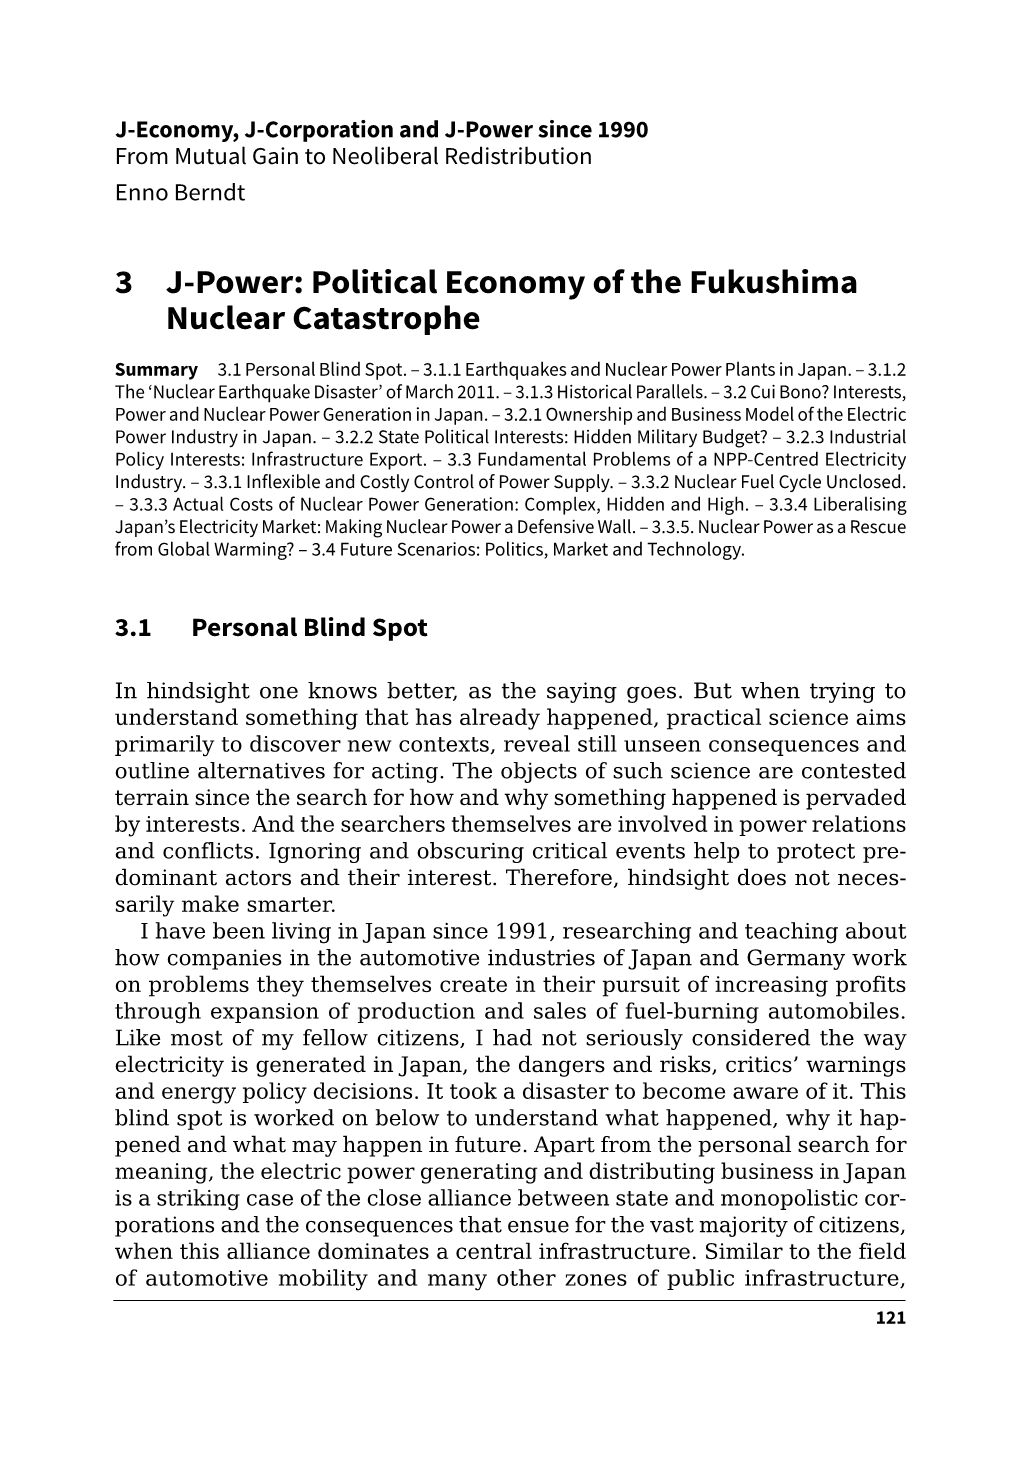 Political Economy of the Fukushima Nuclear Catastrophe